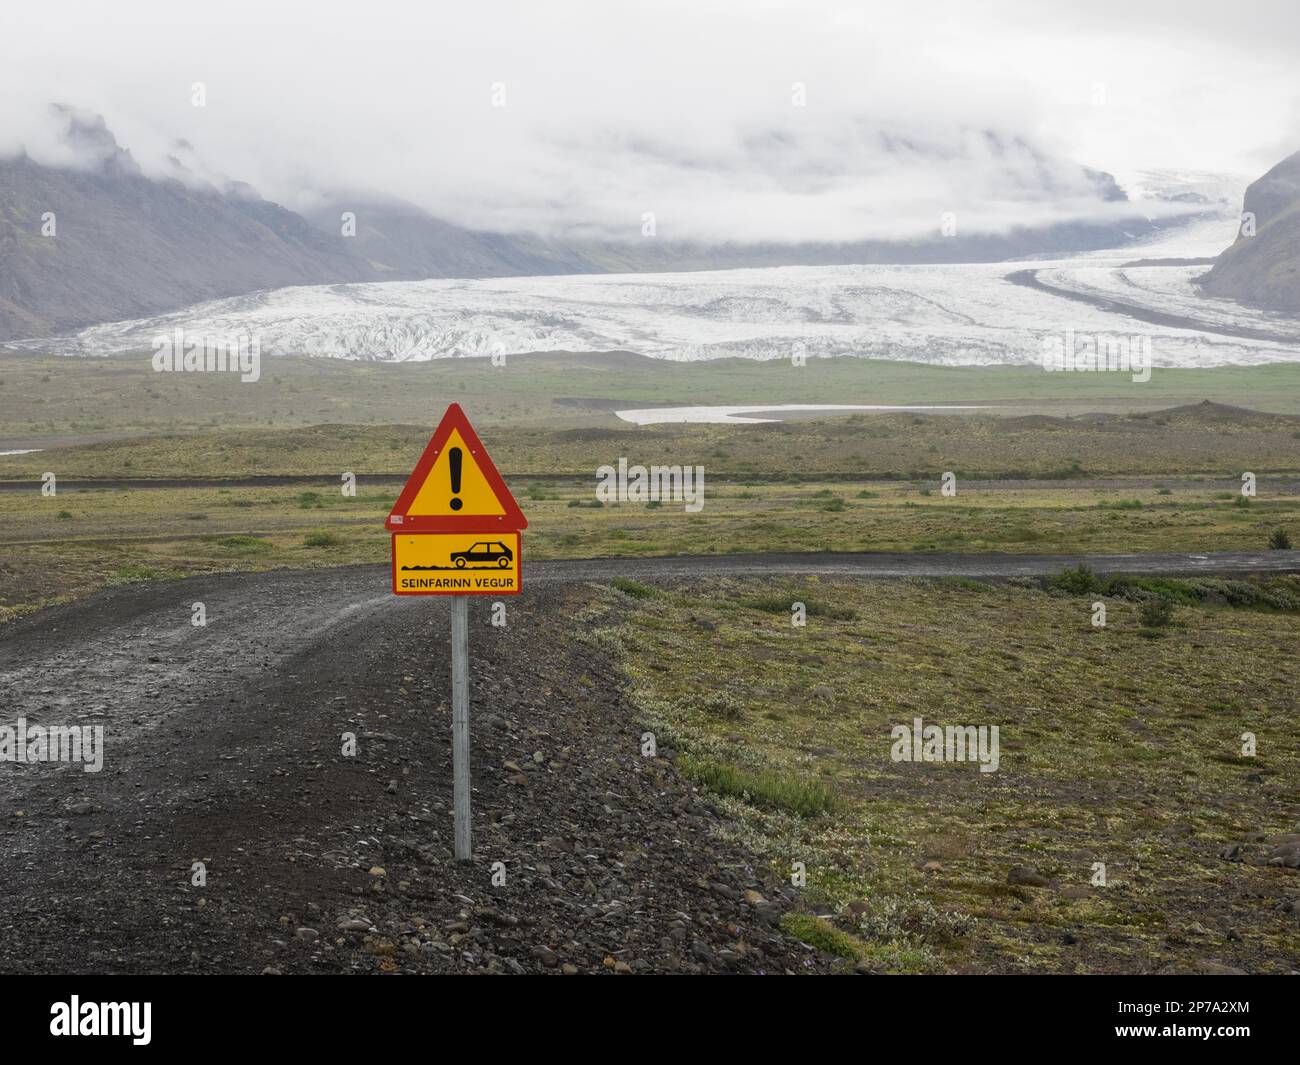 Segnaletica stradale, Seinfarinn vegur, strada difficile, Svinafellsjoekull nella nebbia dietro, lingua del ghiacciaio Vatnajoekull, Islanda Foto Stock